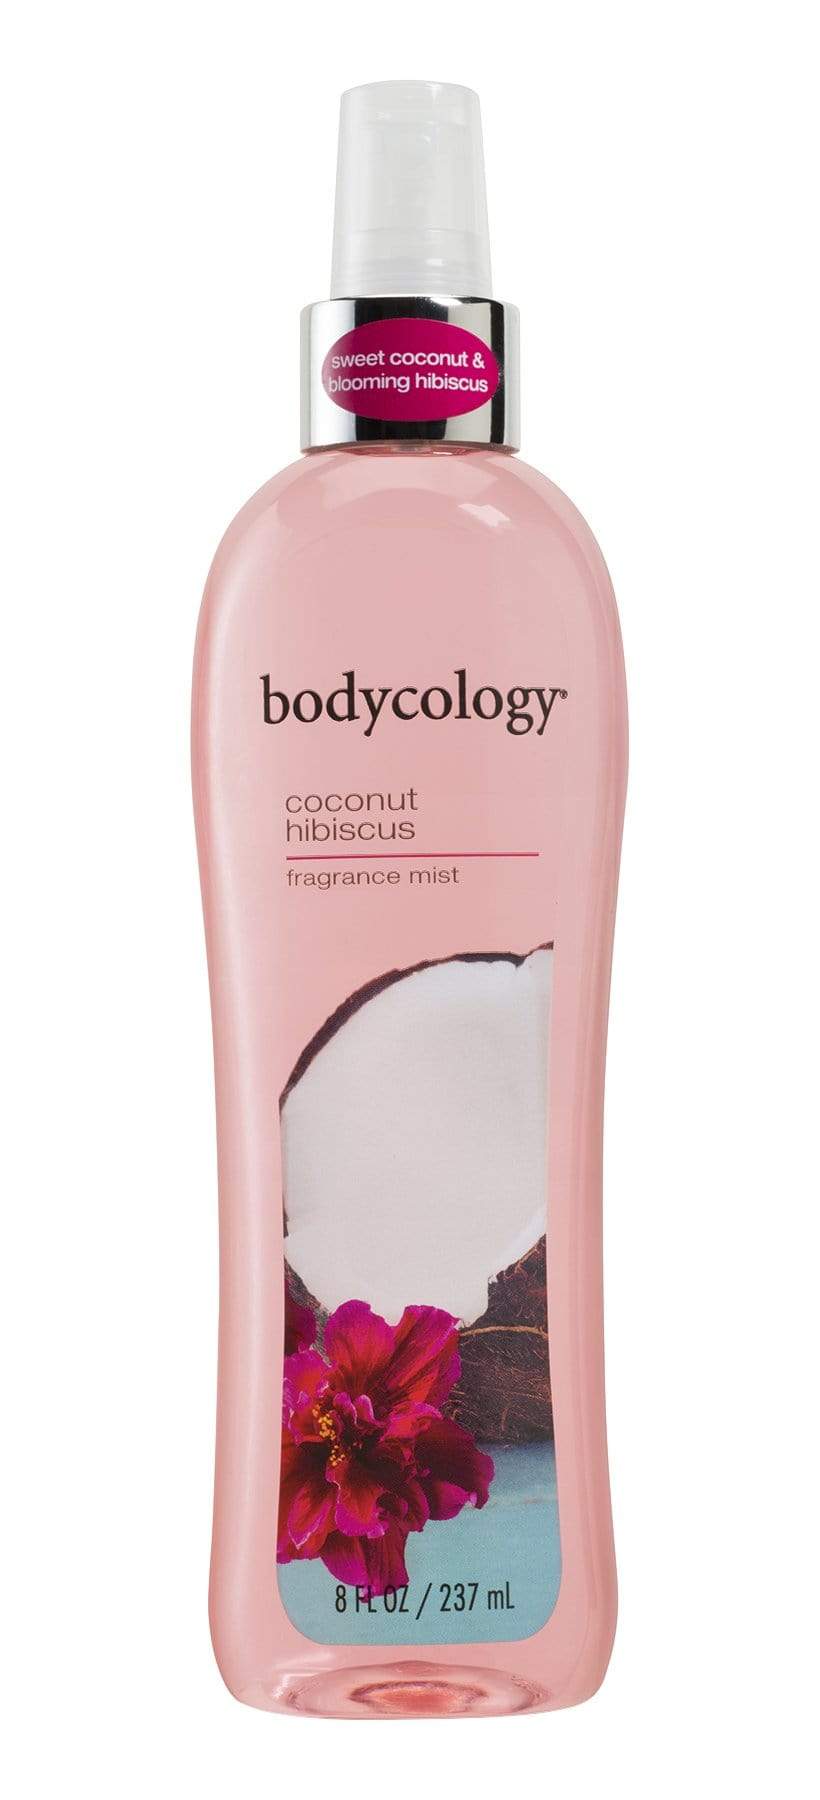 BODYCOLOGY Coconut hibiscus fragrance Mist Body Spray 237 ml1034014PK - Jashanmal Home